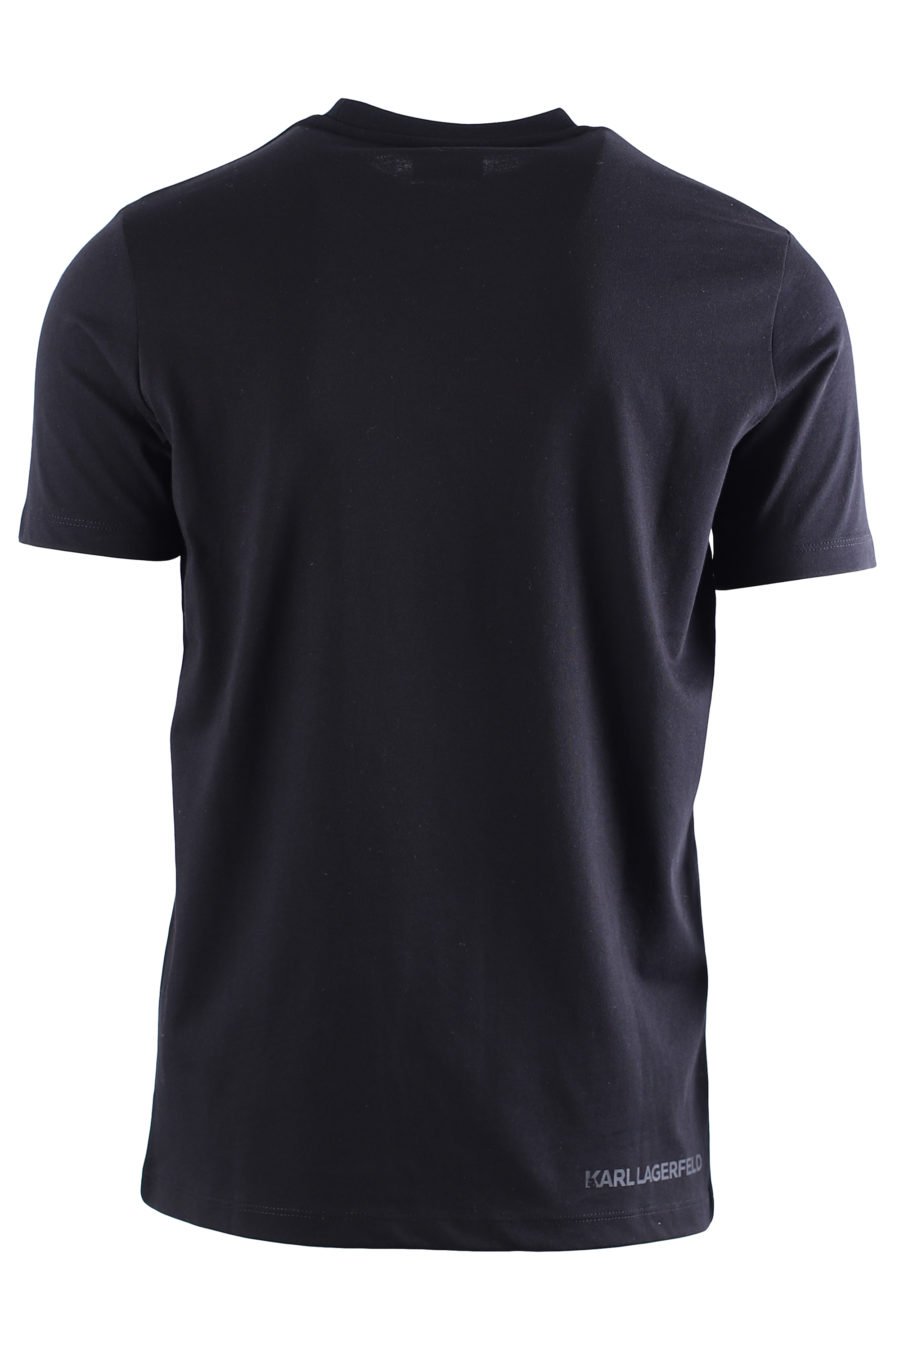 Camiseta negra con logotipo lateral en relieve - IMG 0574